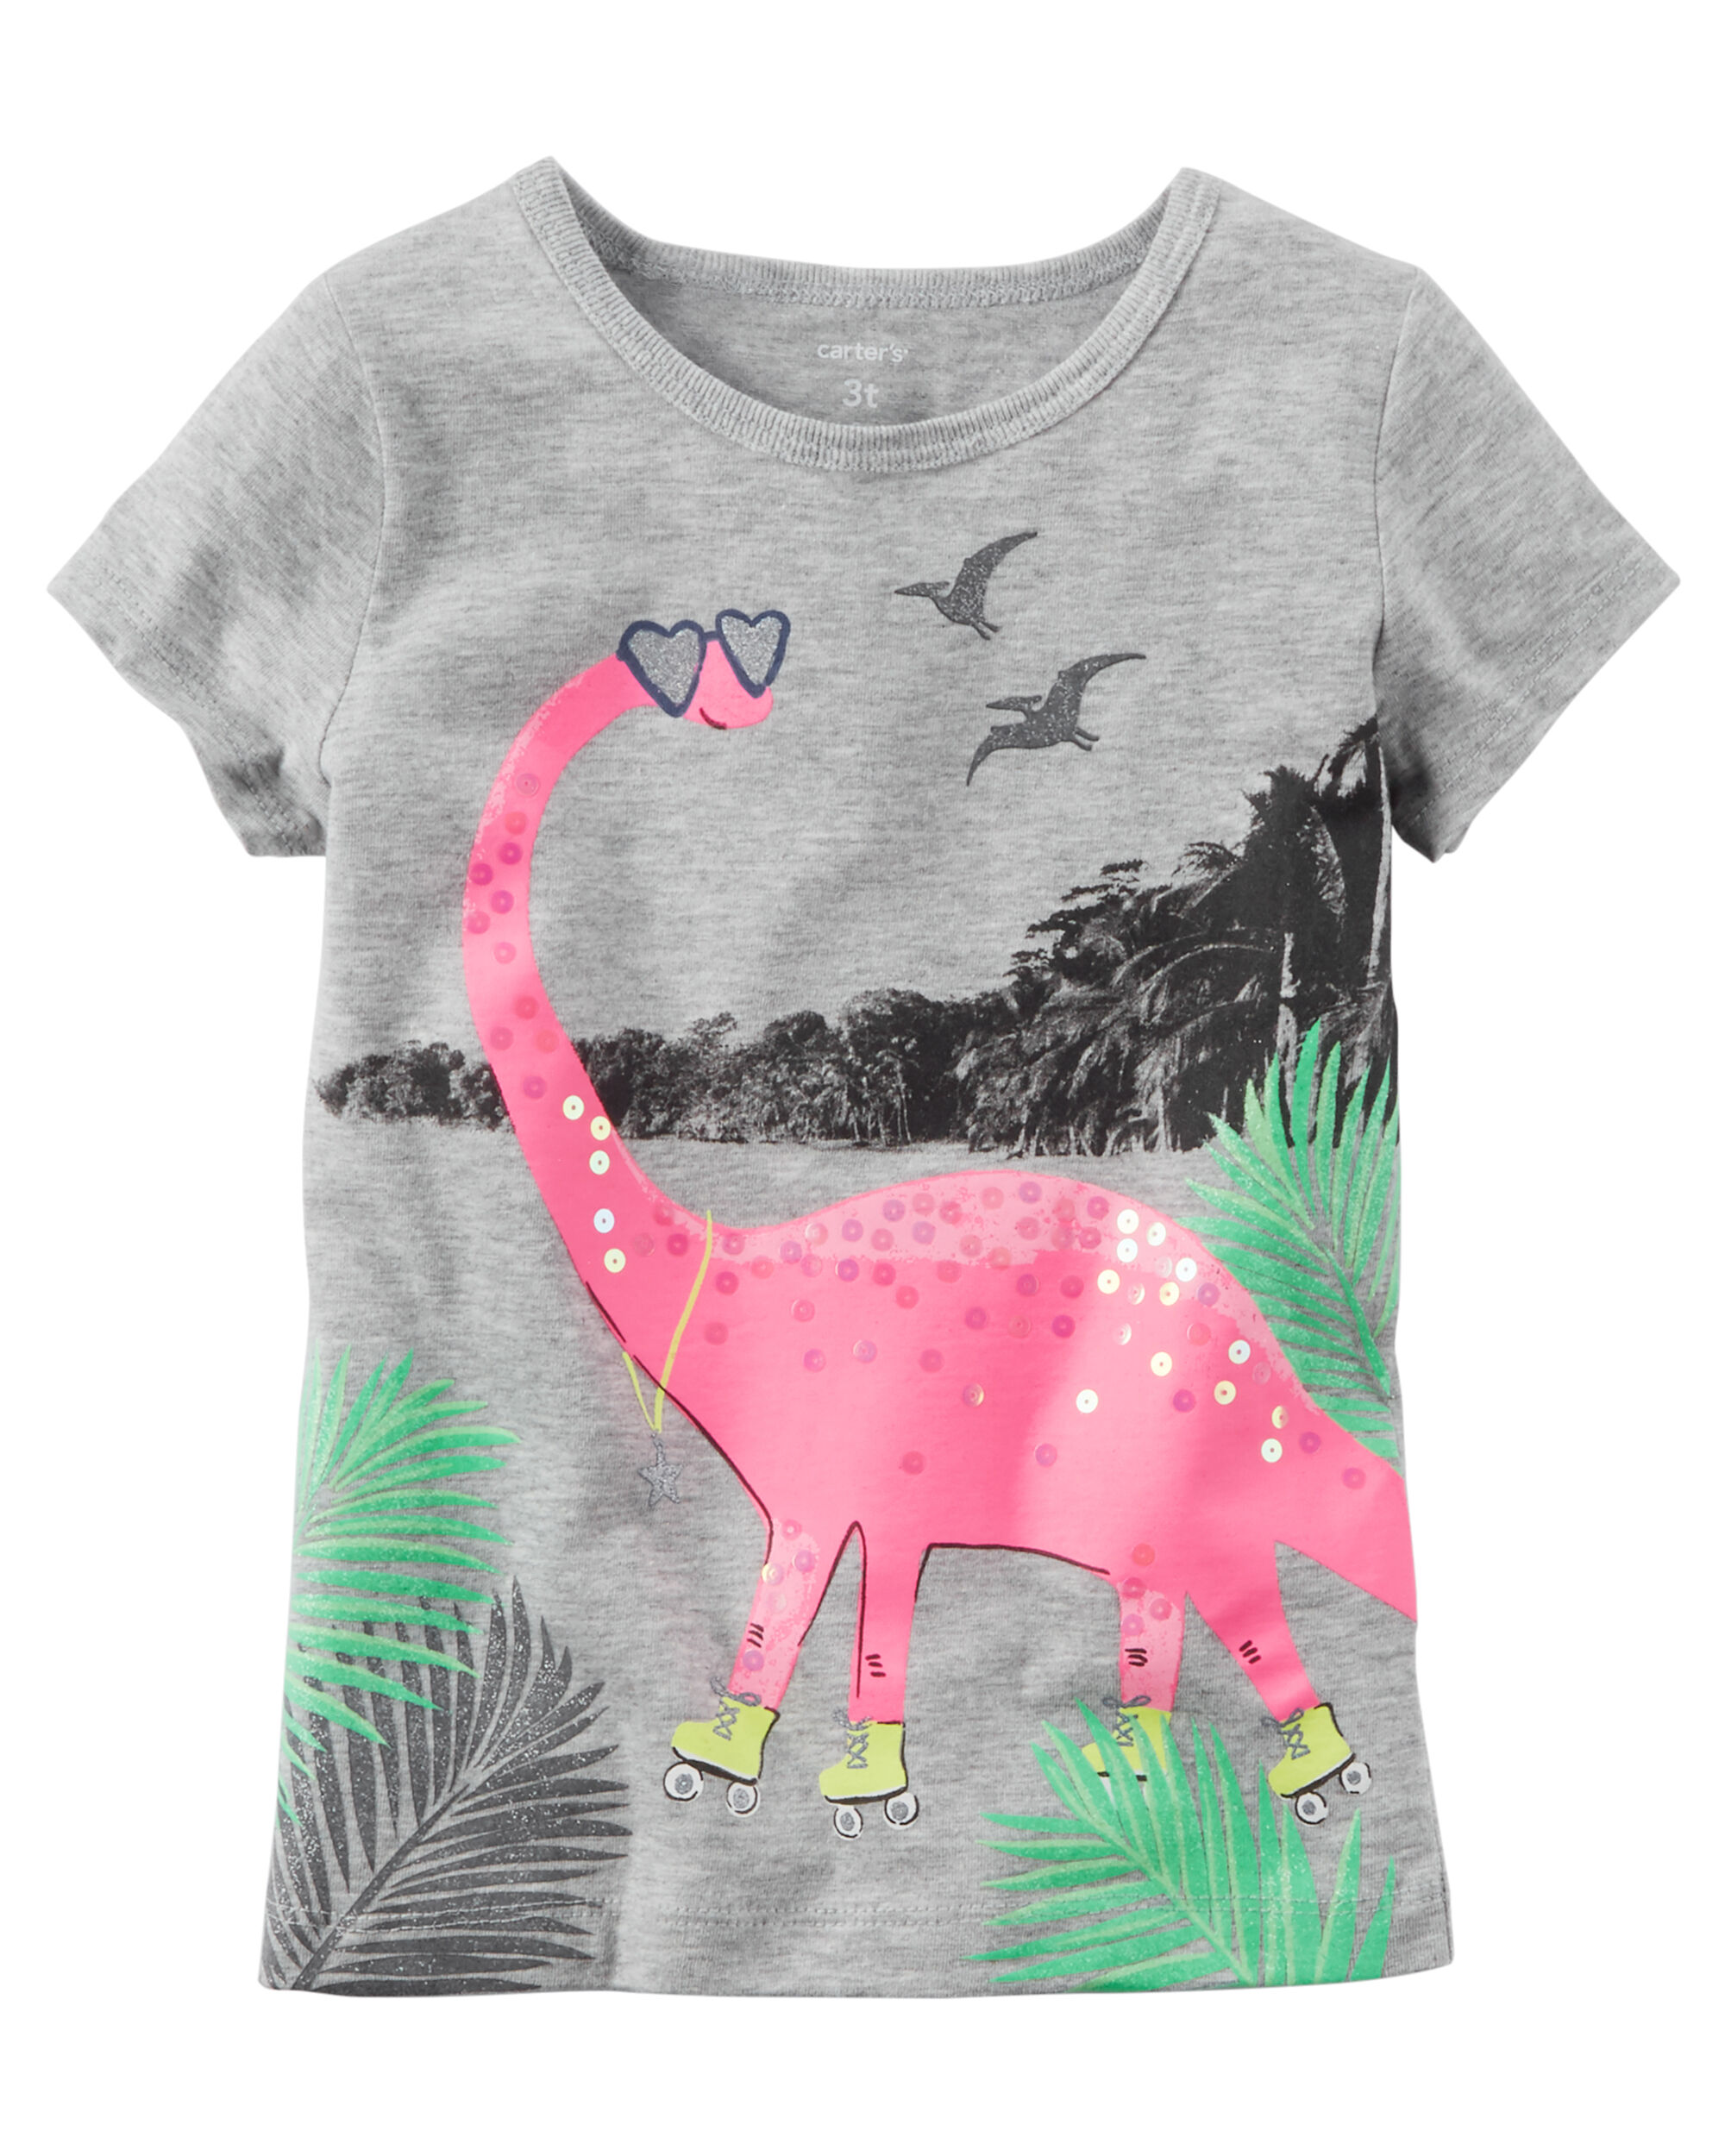 carters baby girl dinosaur clothes